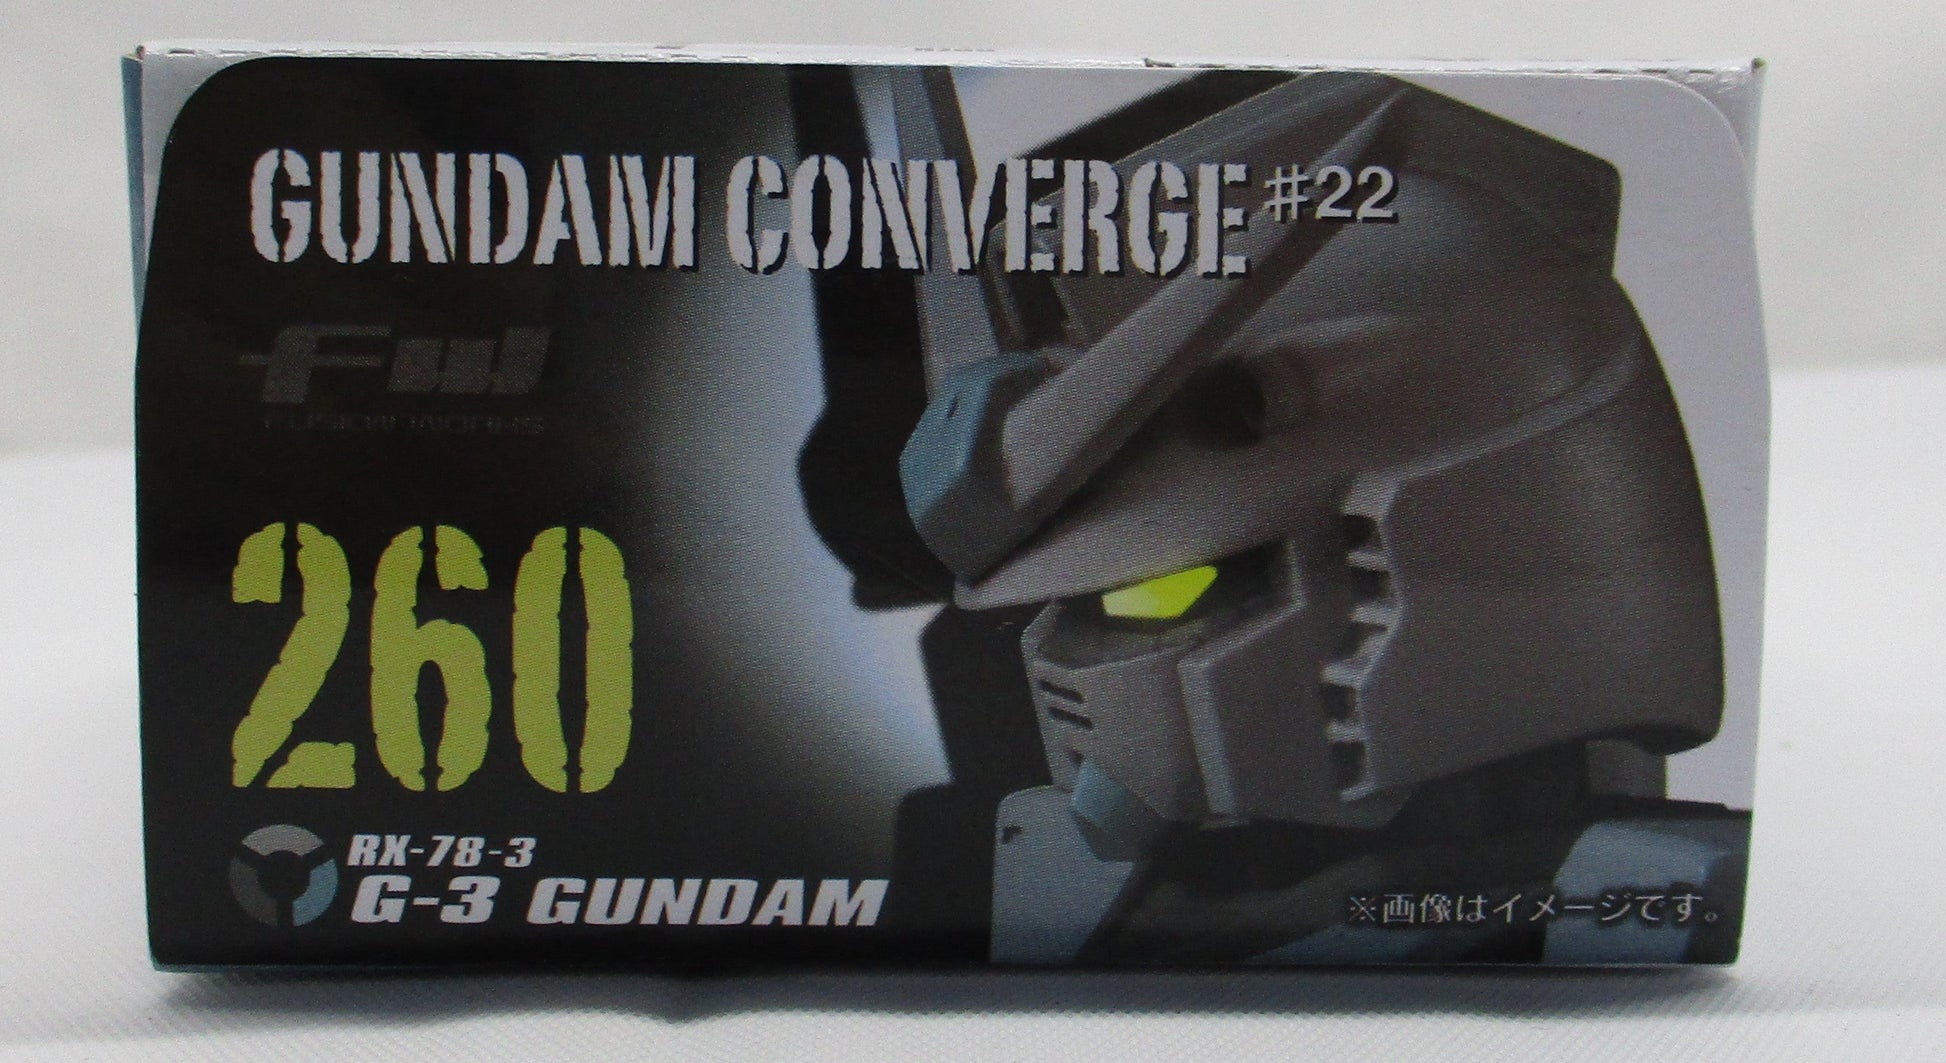 FW Gundam Converge #22 260 G-3 Gundam